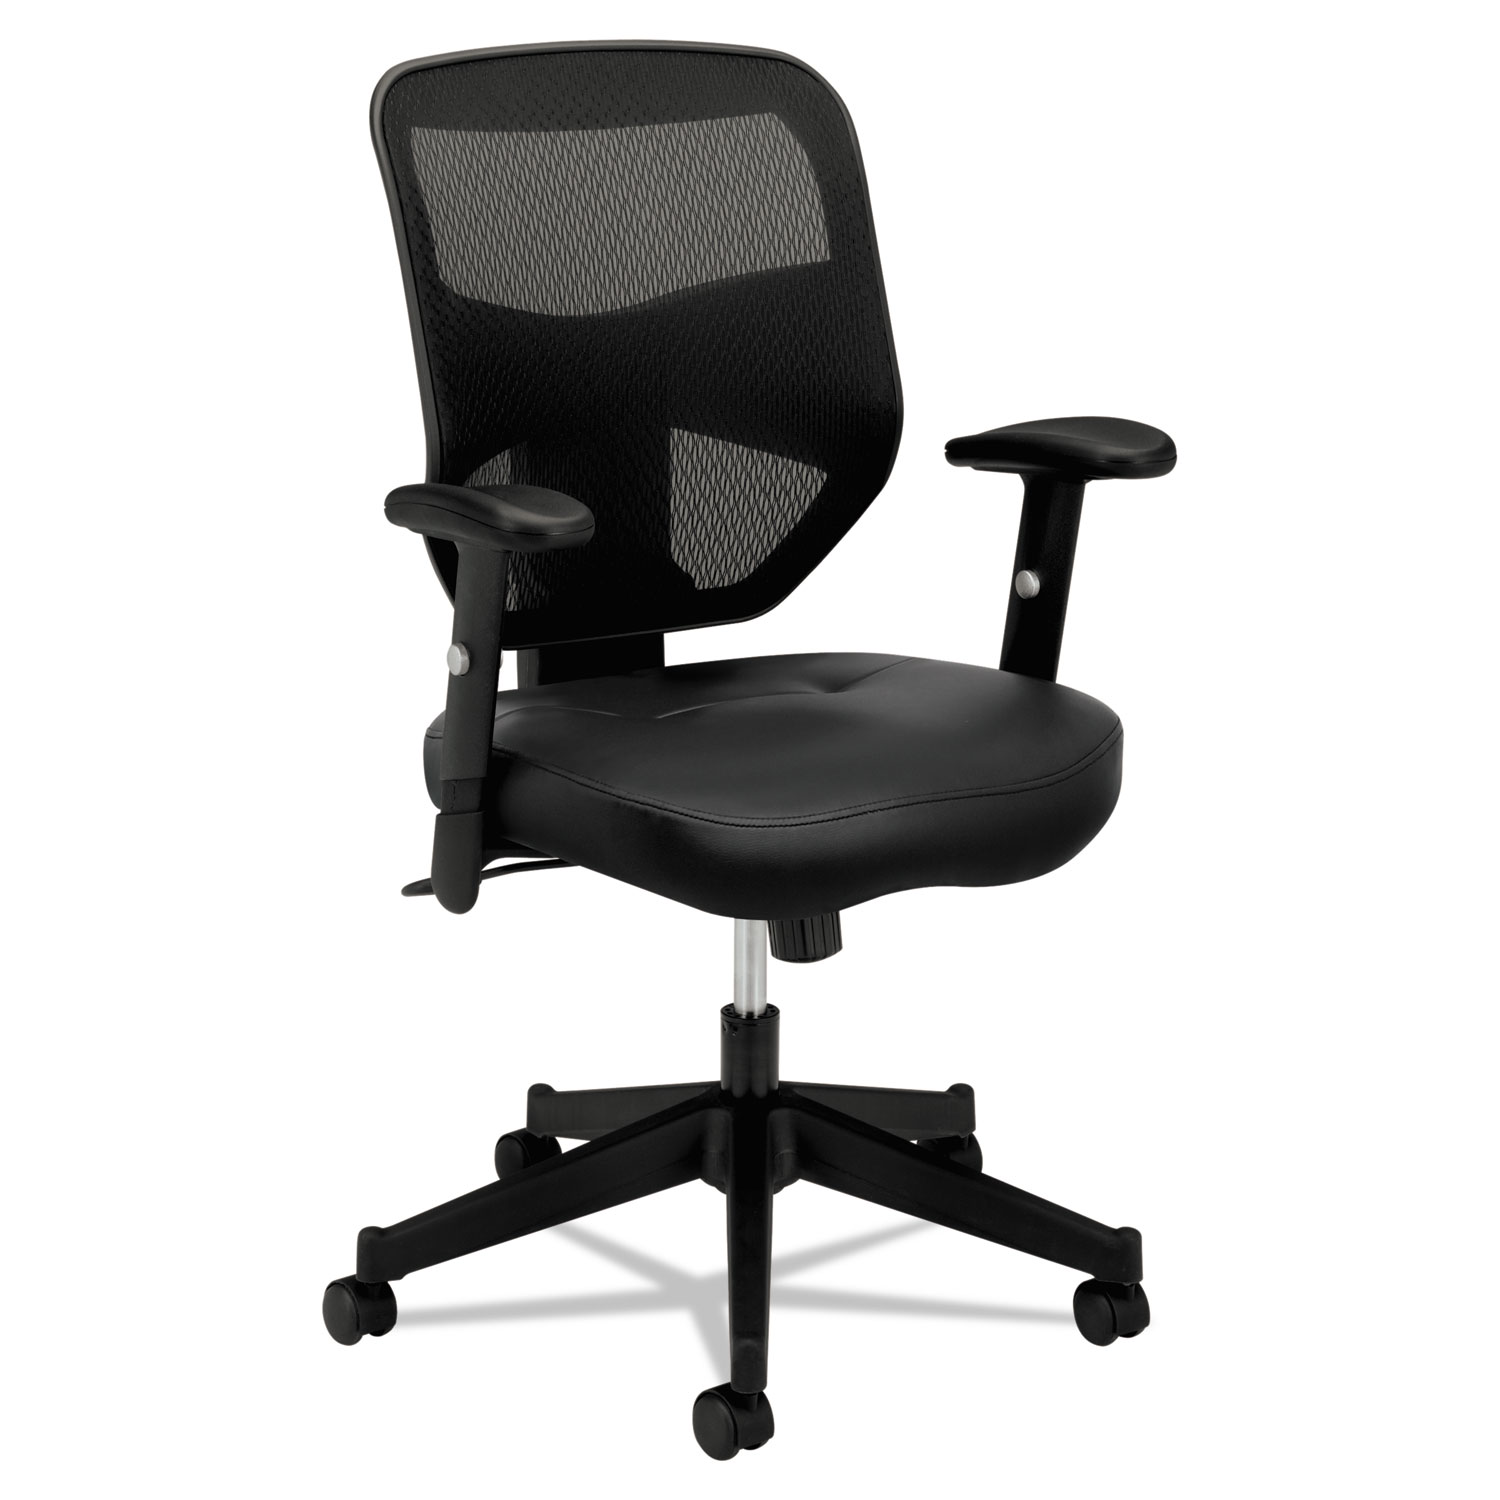 VL531 Series High-Back Work Chair, Mesh Back, Padded Mesh Seat, Black Leather